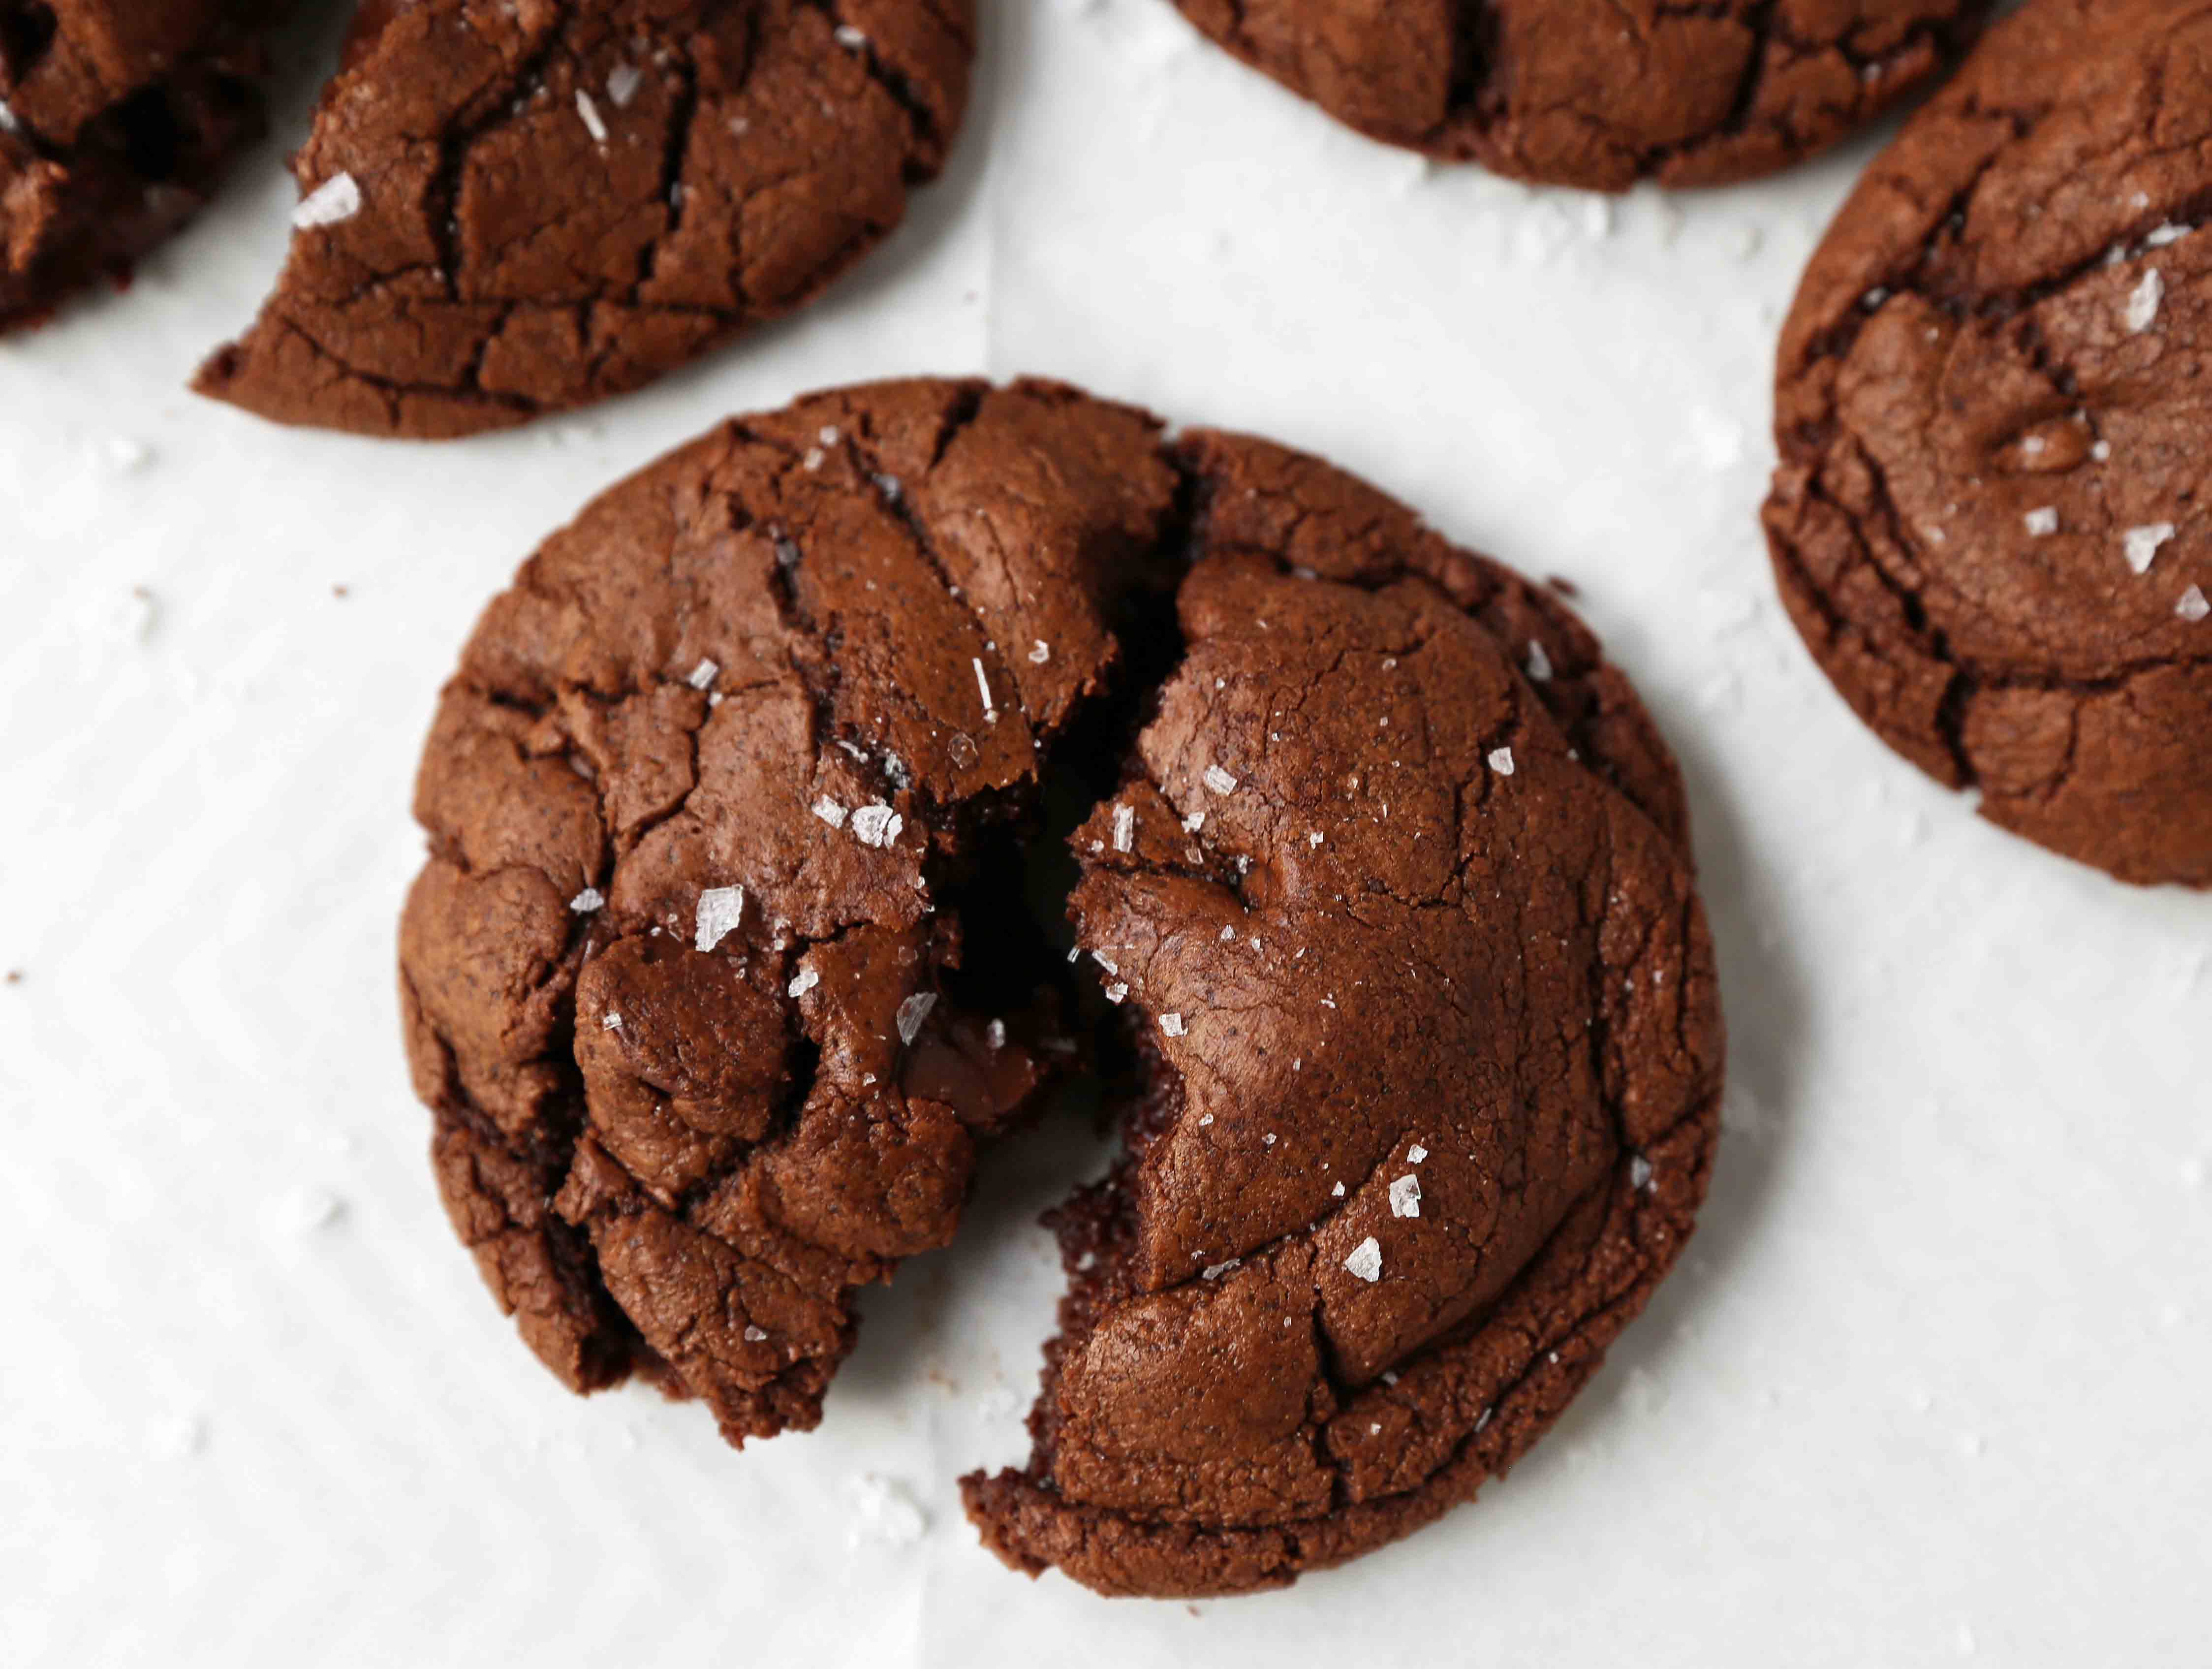 Chocolate Brownie Cookies. Rich, decadent triple chocolate cookies are so decadent. The perfect chocolate brownie cookie recipe! www.modernhoney.com #chocolatebrowniecookies #browniecookies #chocolatecookies 